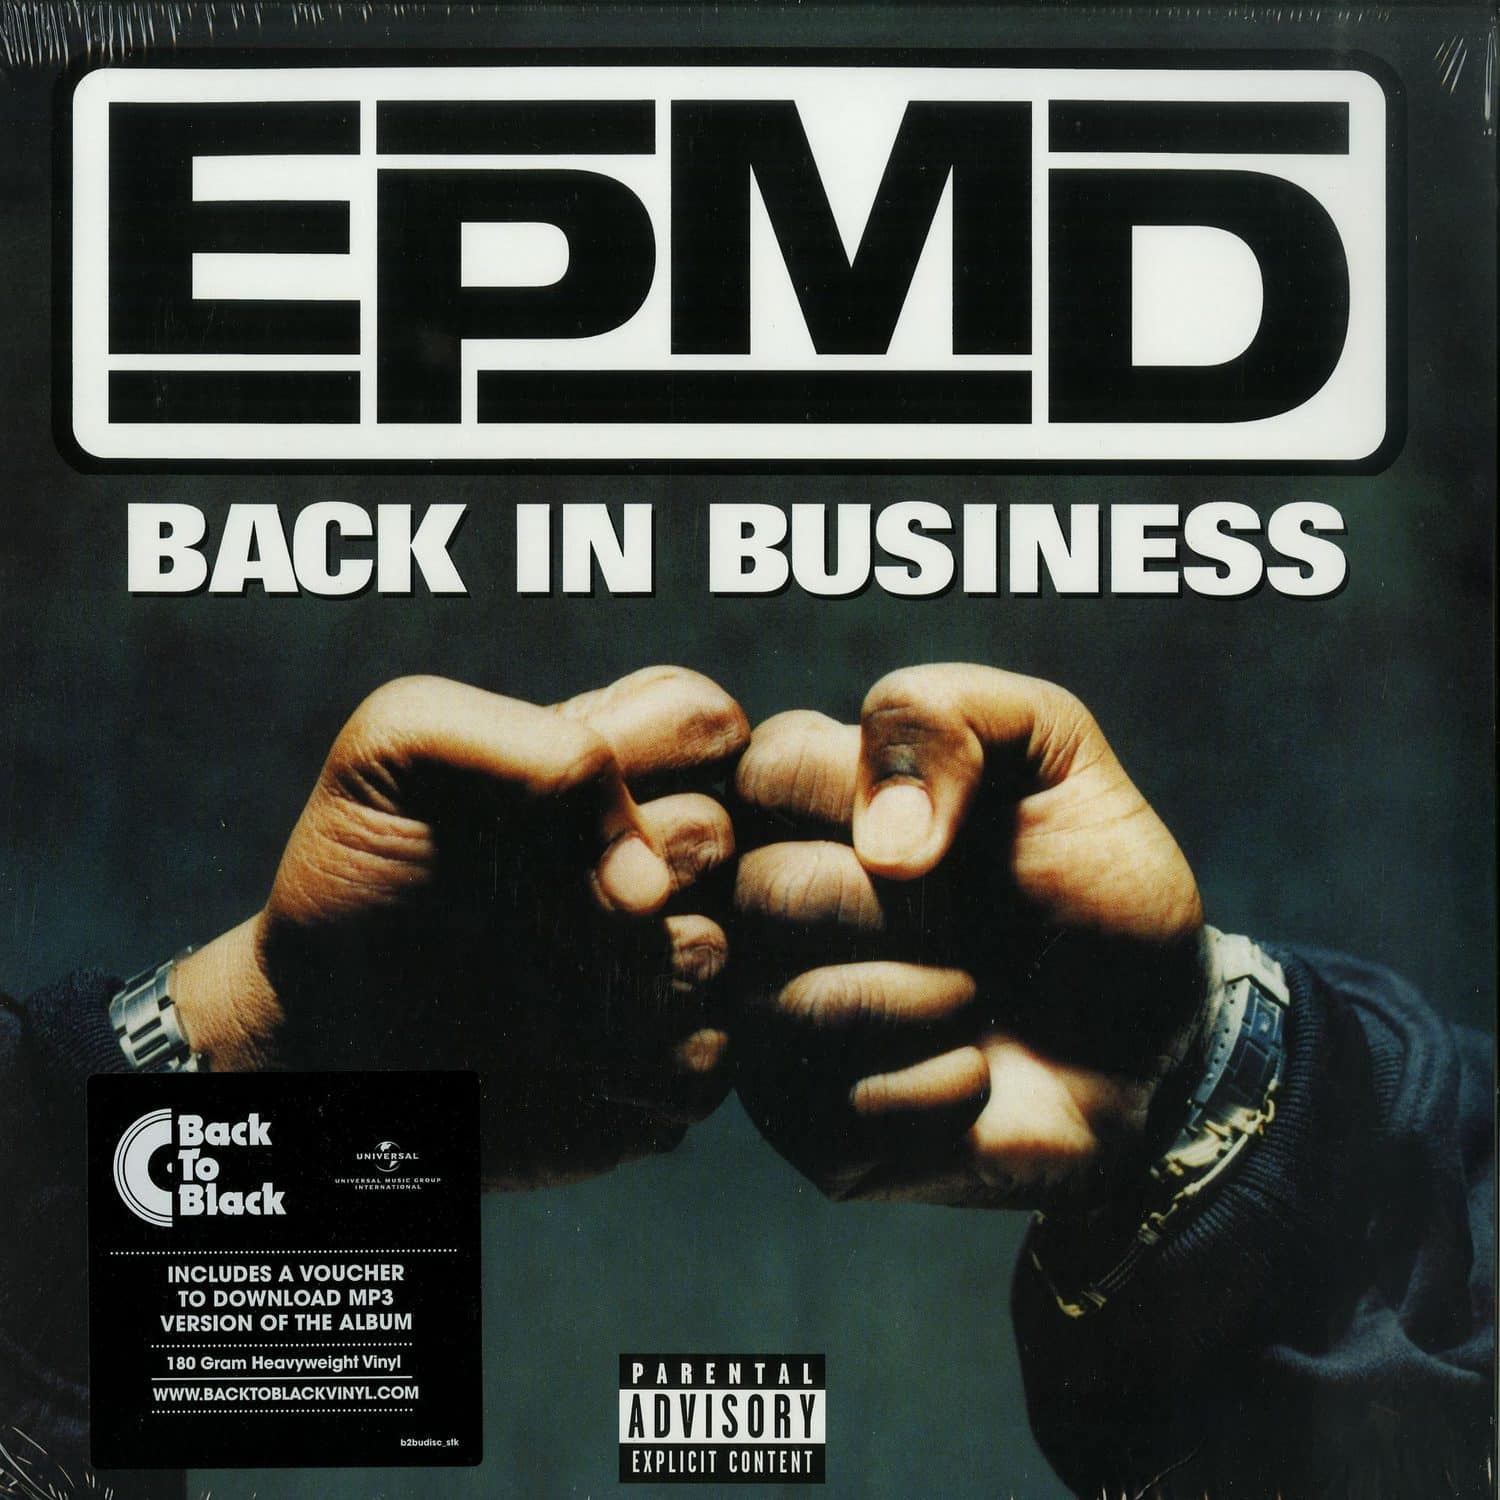 EPMD - BACK IN BUSINESS 